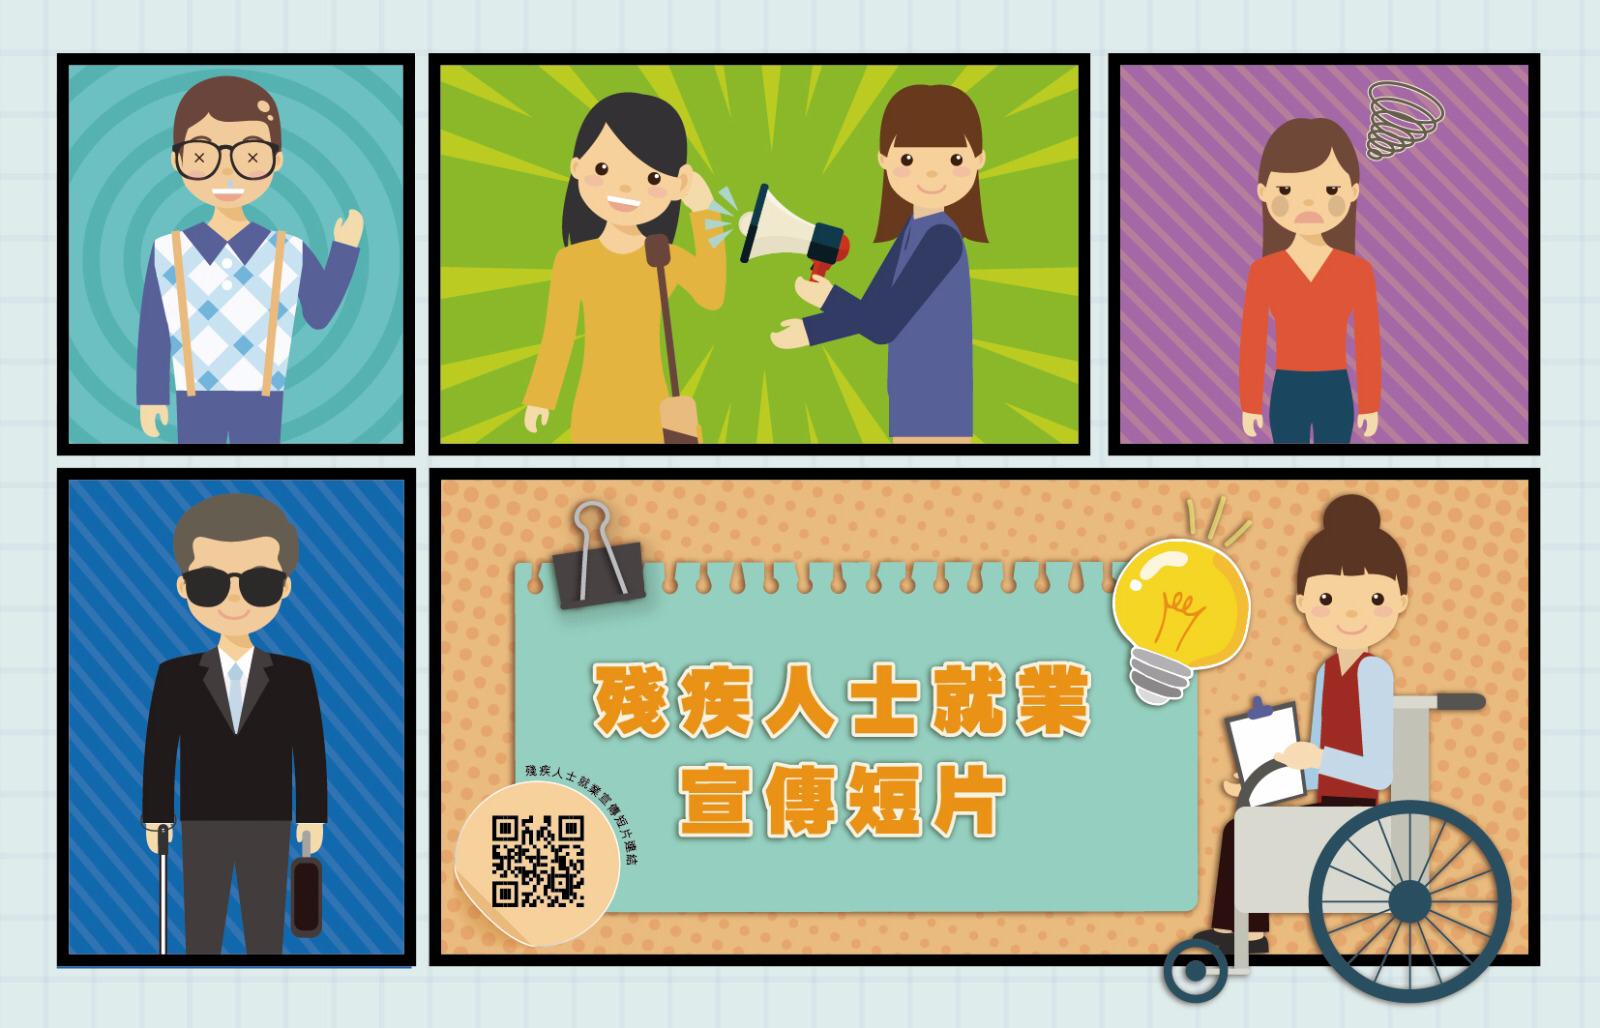 HKWCC 殘障人士就業宣傳短片